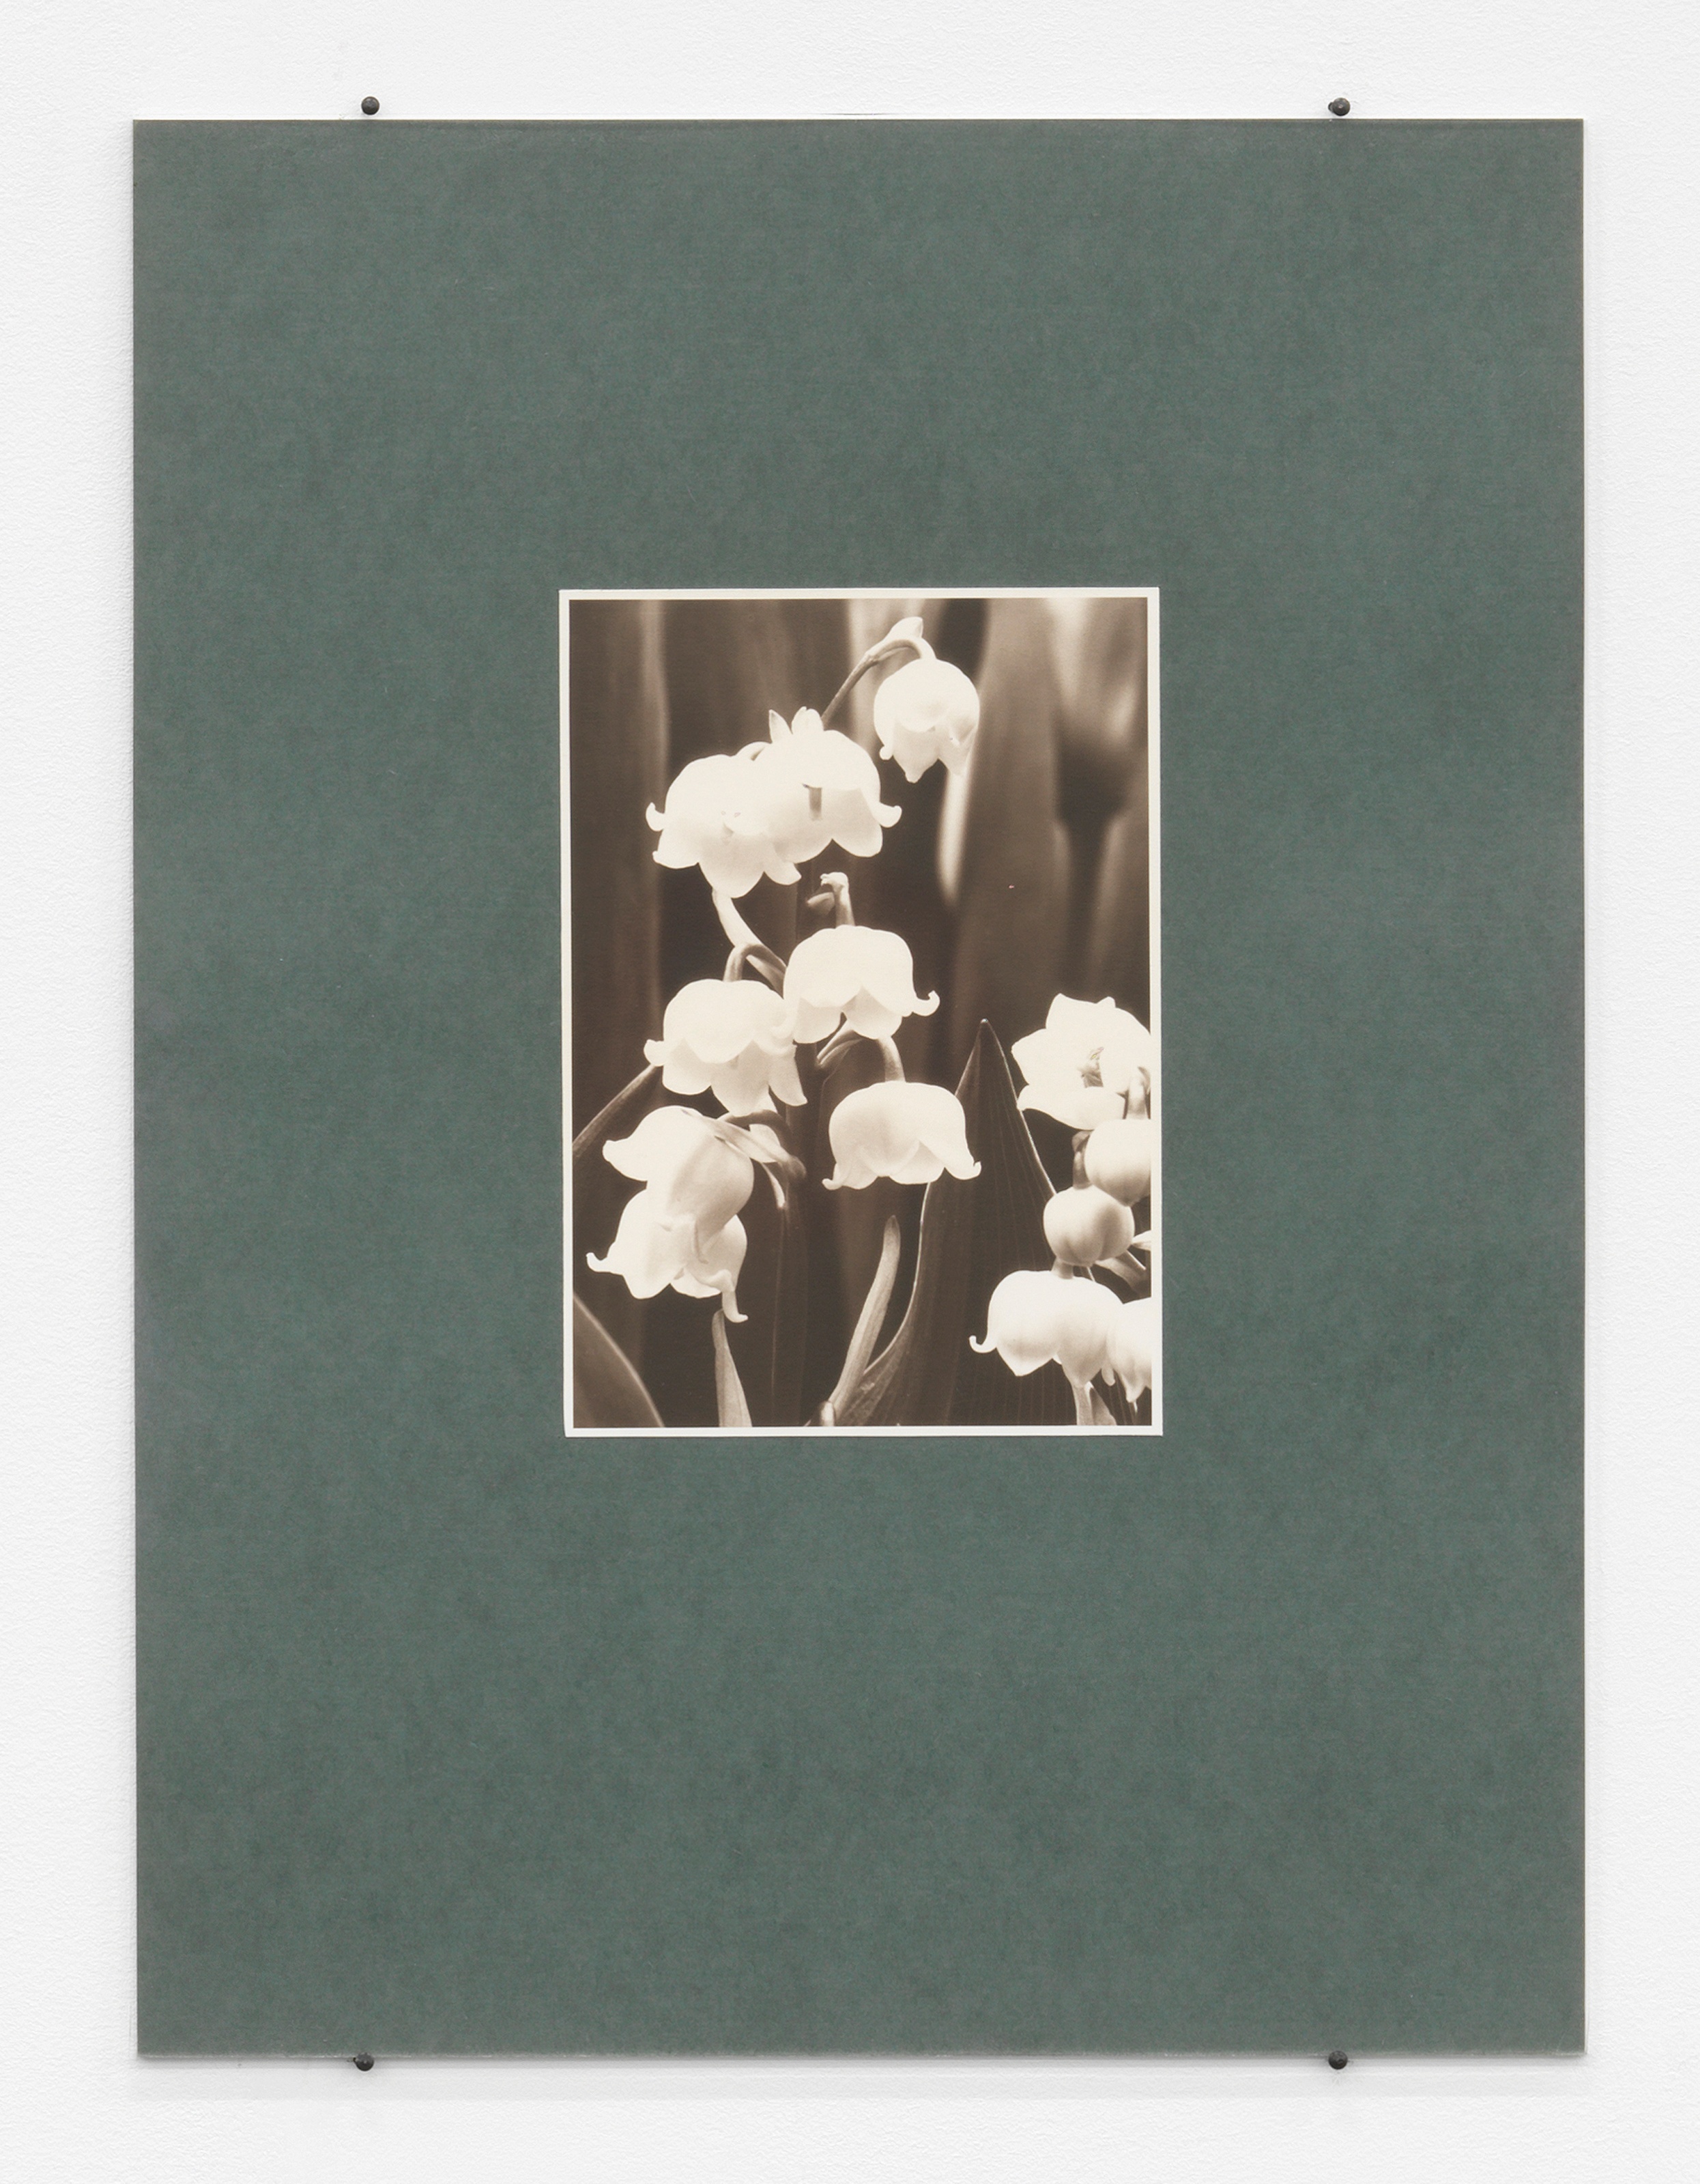 Albert Renger-PatzschConvallaria Maialis, May Flower, 1920sphotograph mounted on cardboard17.3 x 12.4 cm | 6 3/4 x 5 in